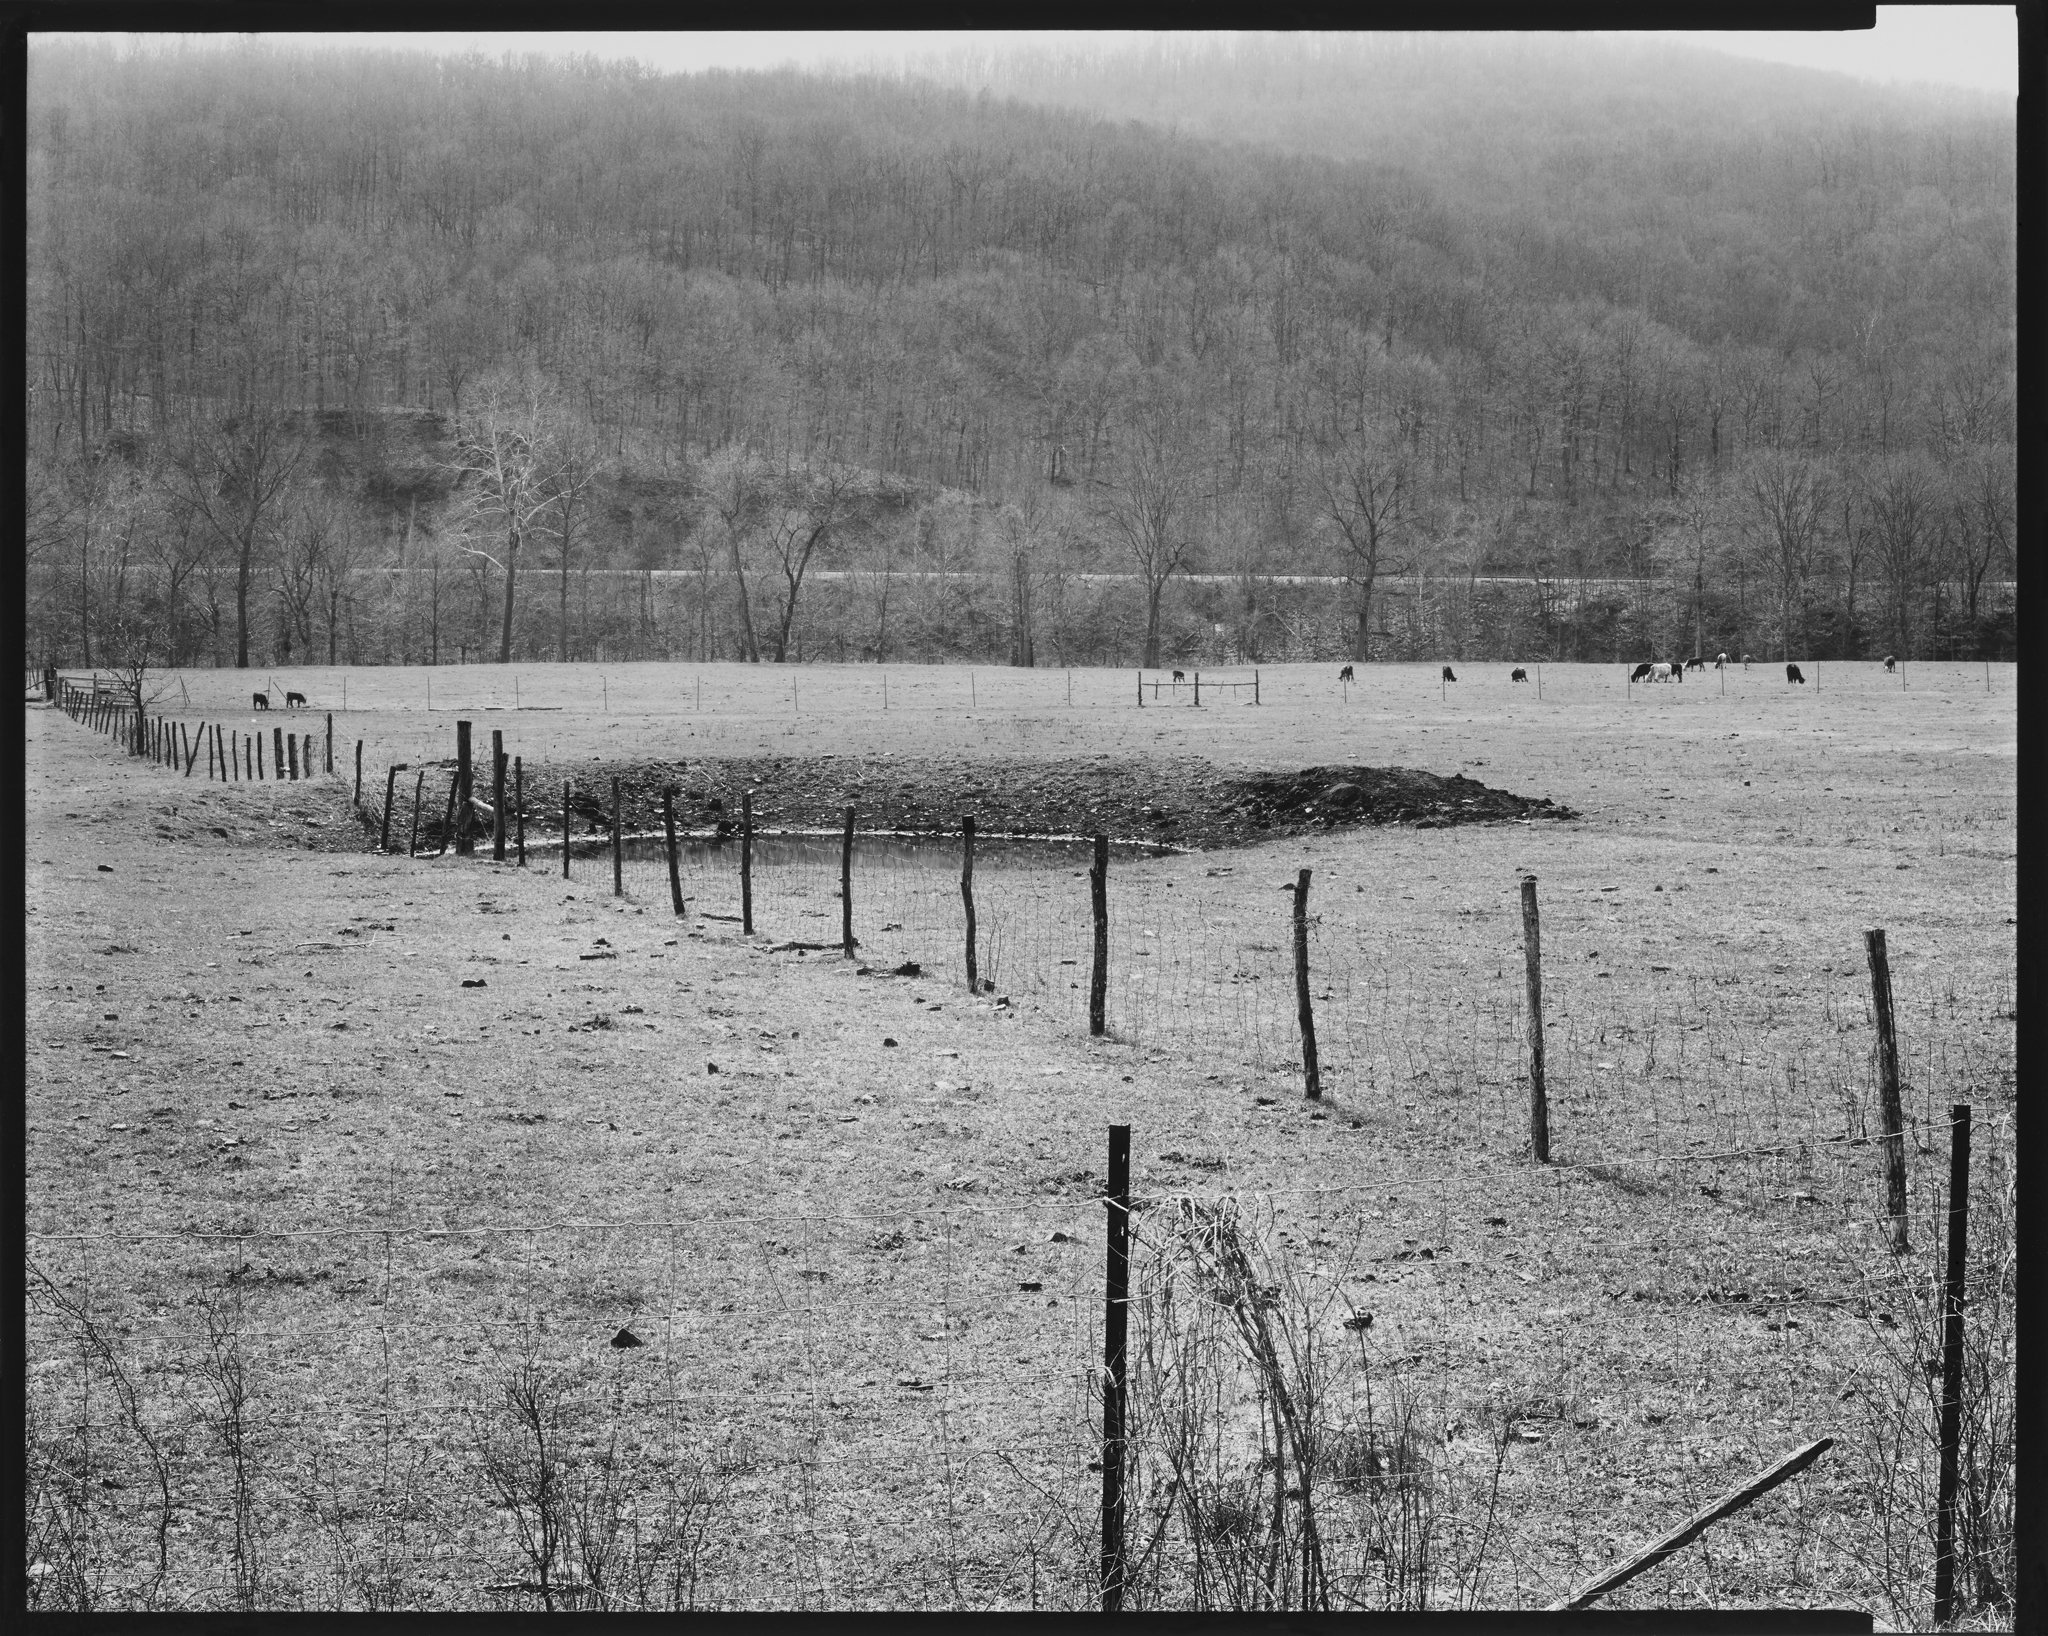 American Landscapes Portfolio_Pasture, Arkansas_1981 © Nick Merrick.jpg